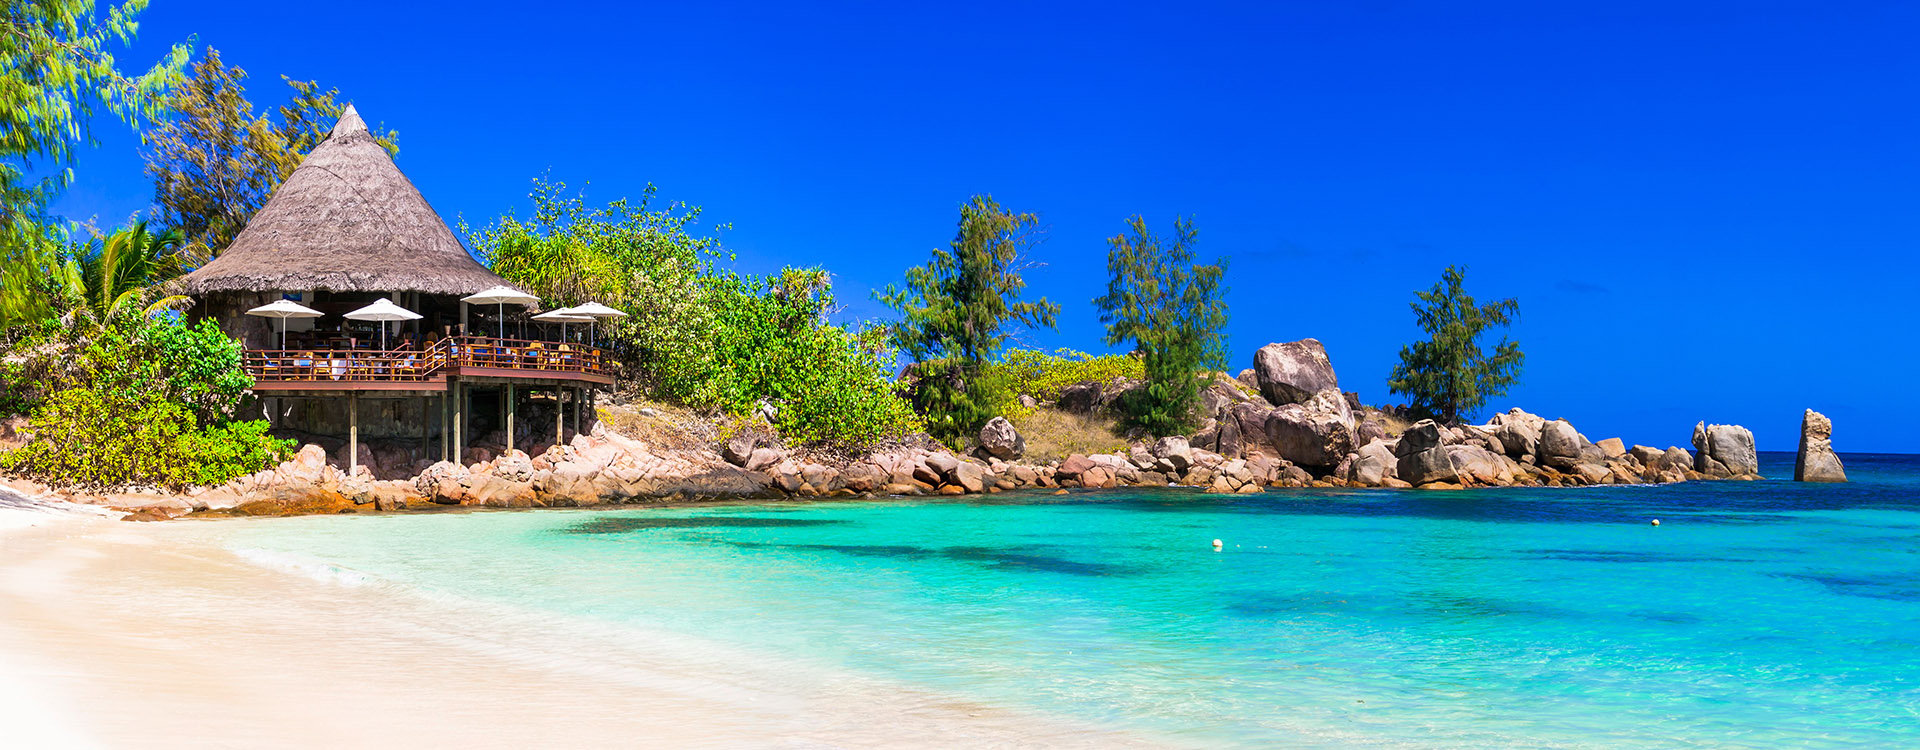 Seychelles, Praslin island